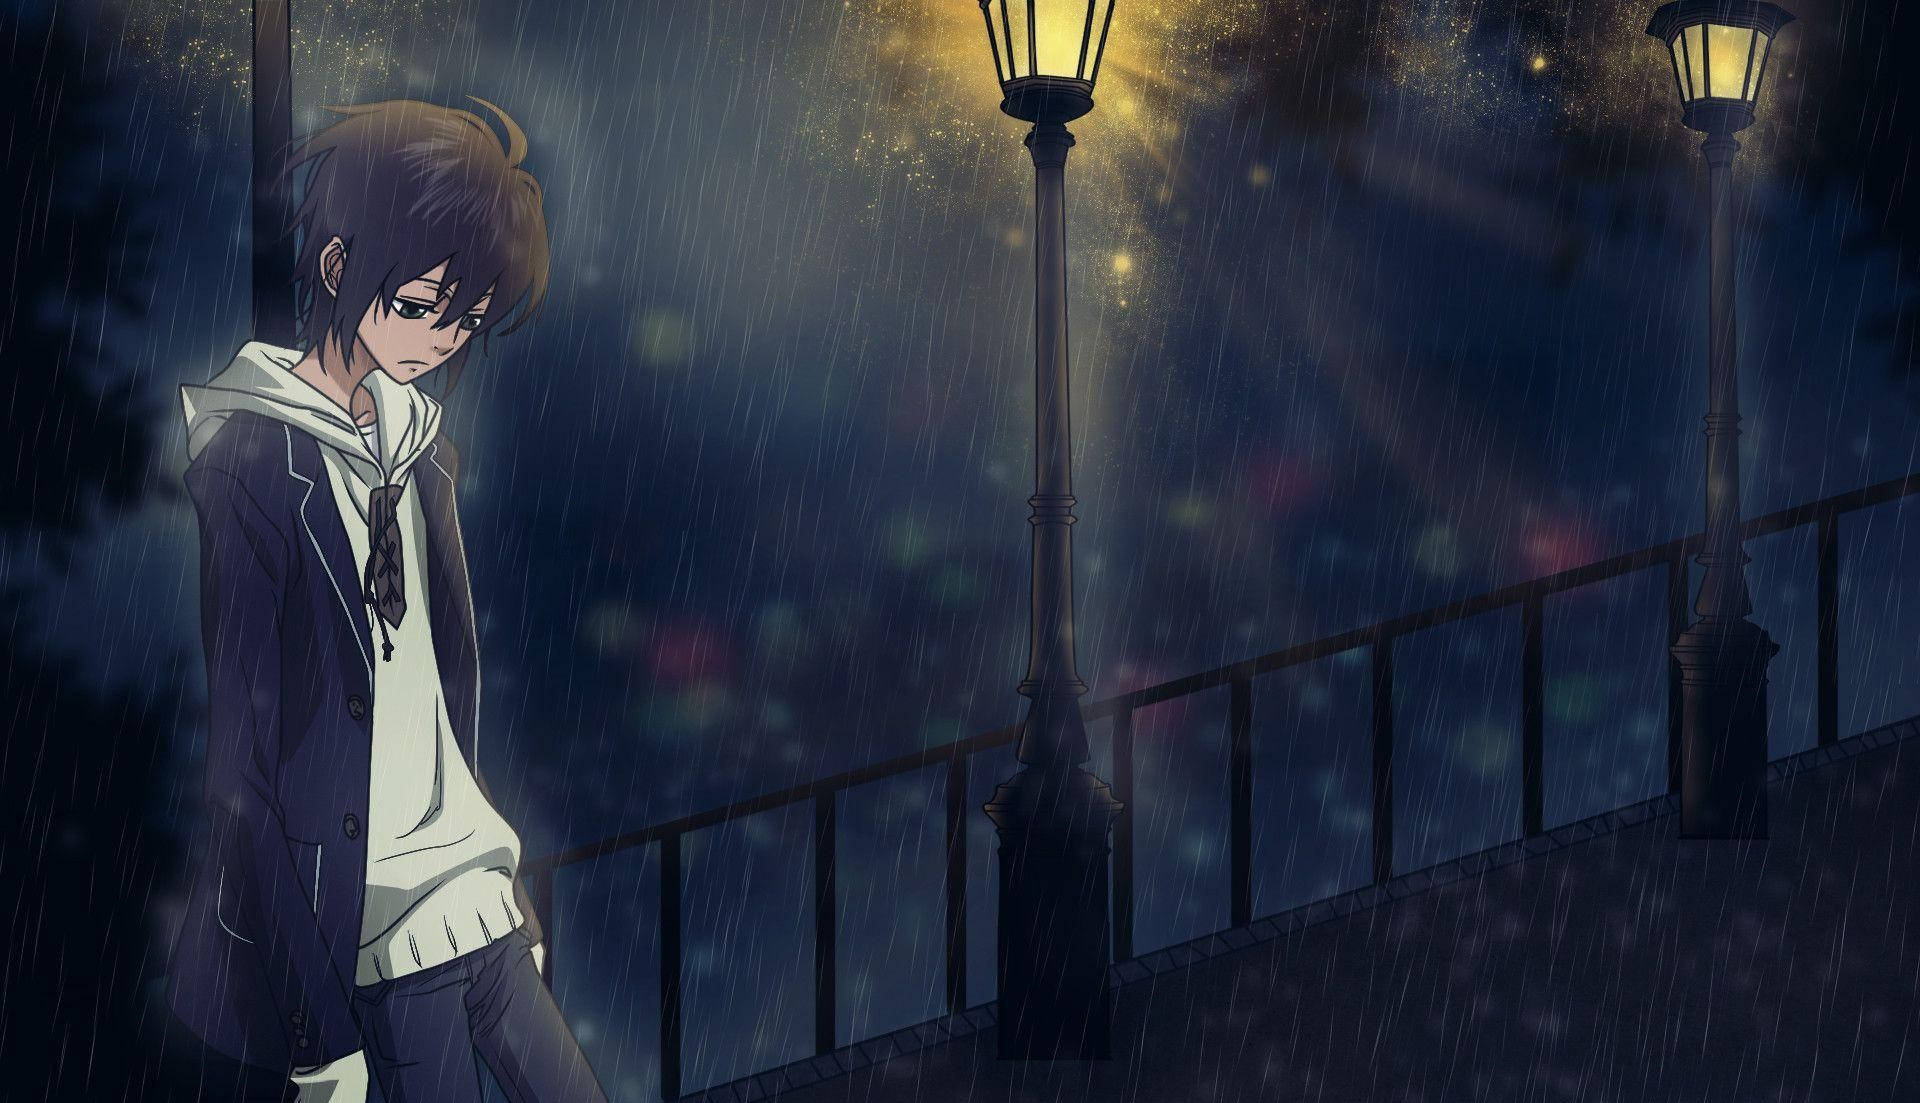 Sad Anime Boy In Rain Wallpaper